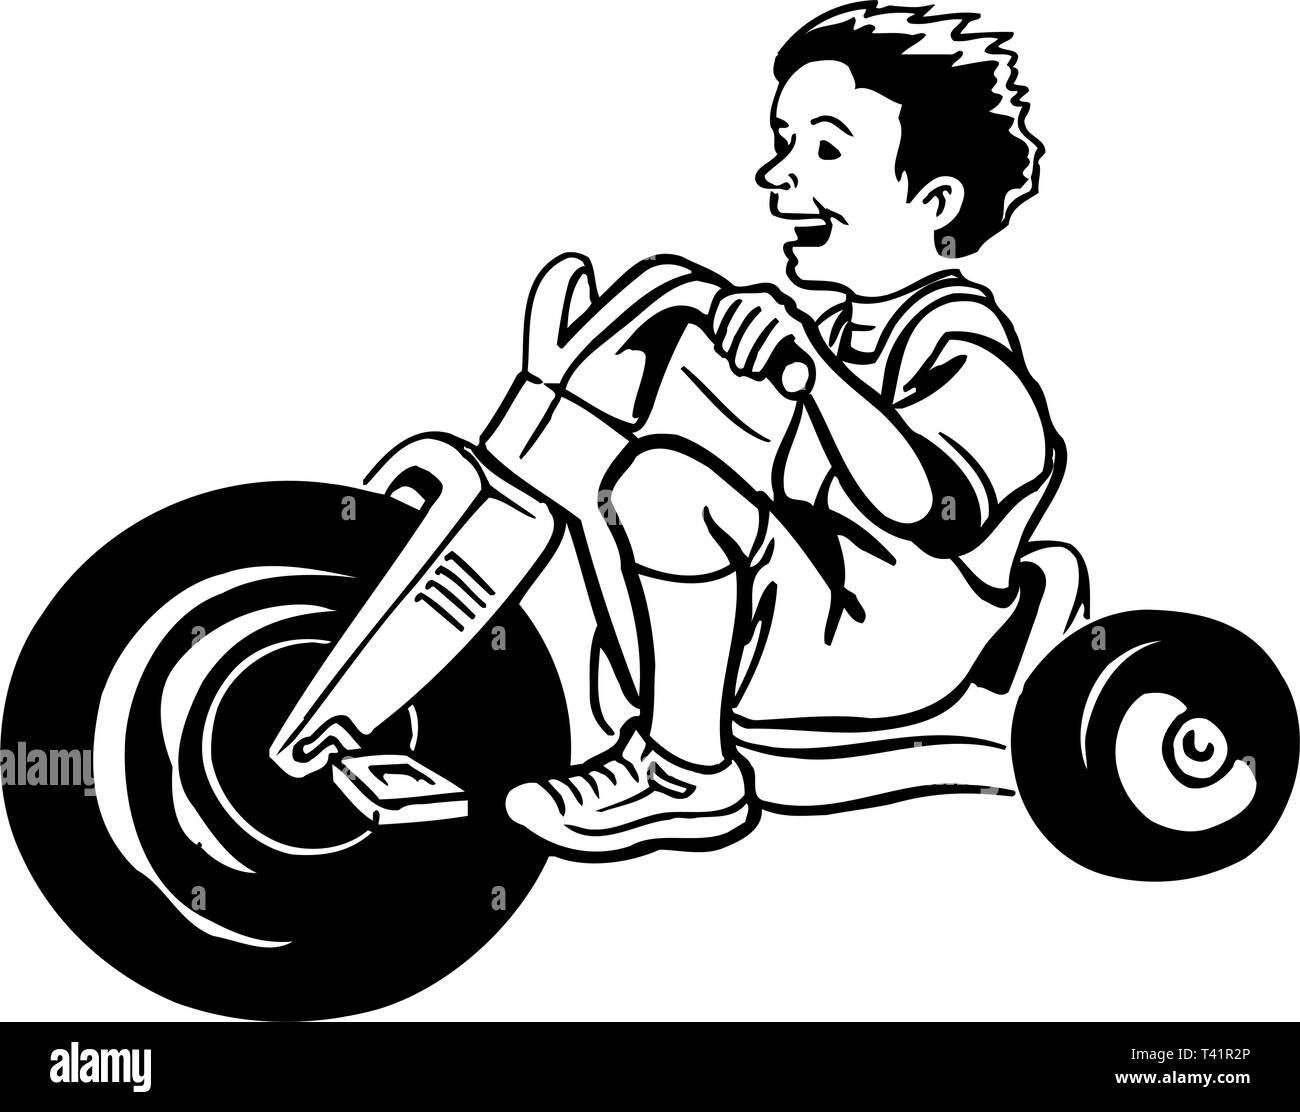 Big Wheel Rider Vector Illustration Stock Vector Image And Art Alamy